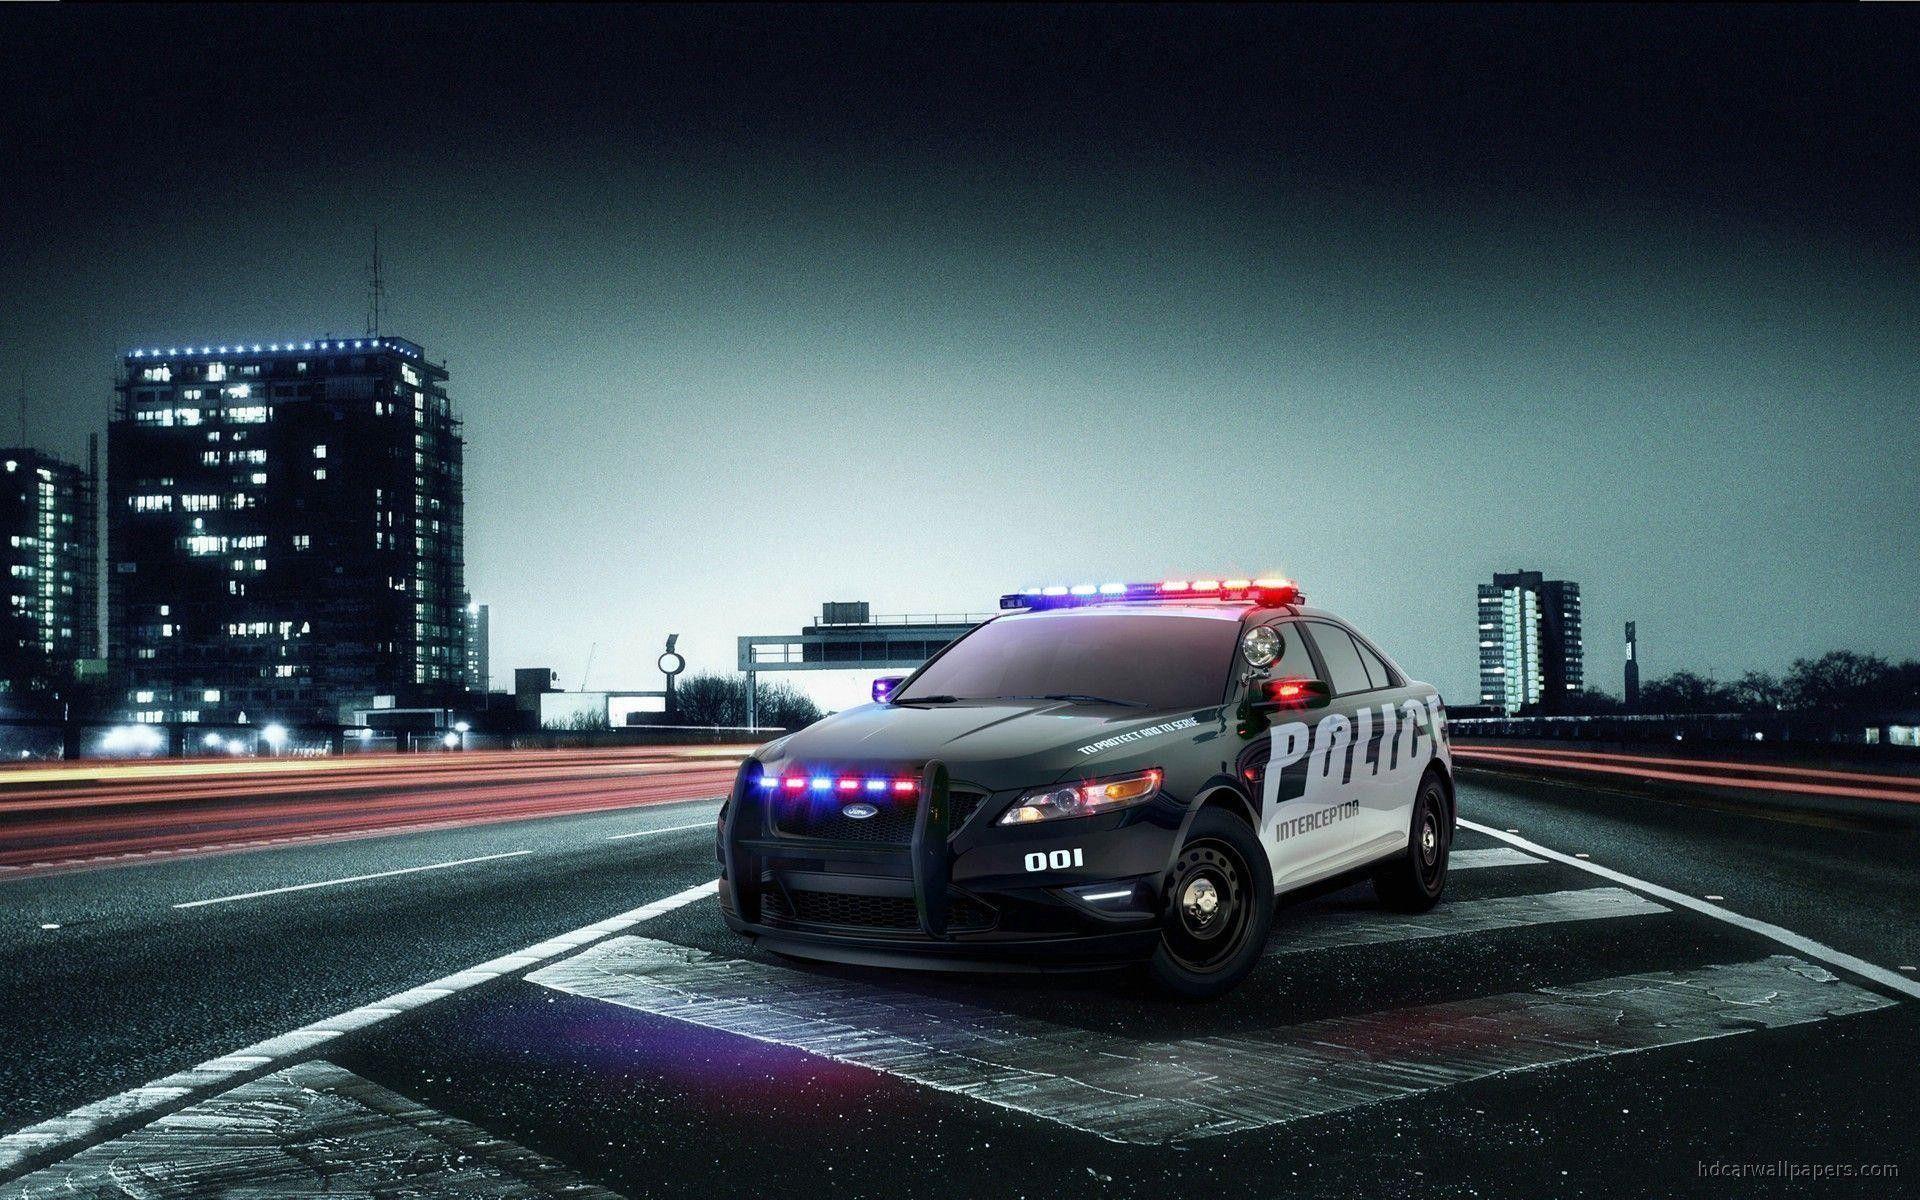 666 Top Police car light live wallpaper 